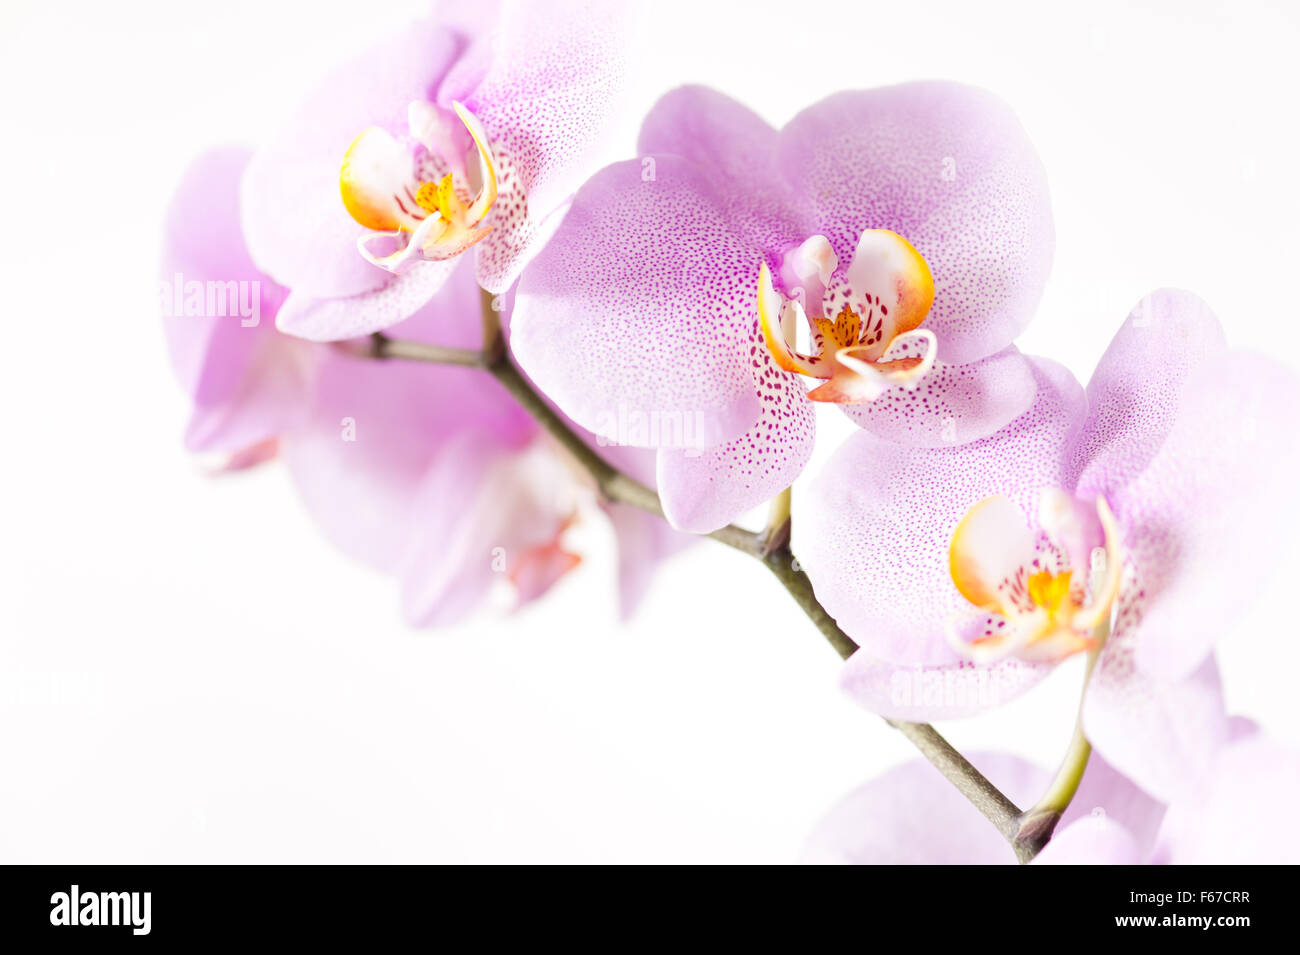 Rosa fleckige Orchidee Blüten, blühen Makro blühende Pflanze Detail in der Orchidaceae Familie, weiße gelbe Blume rosa gesprenkelt Stockfoto